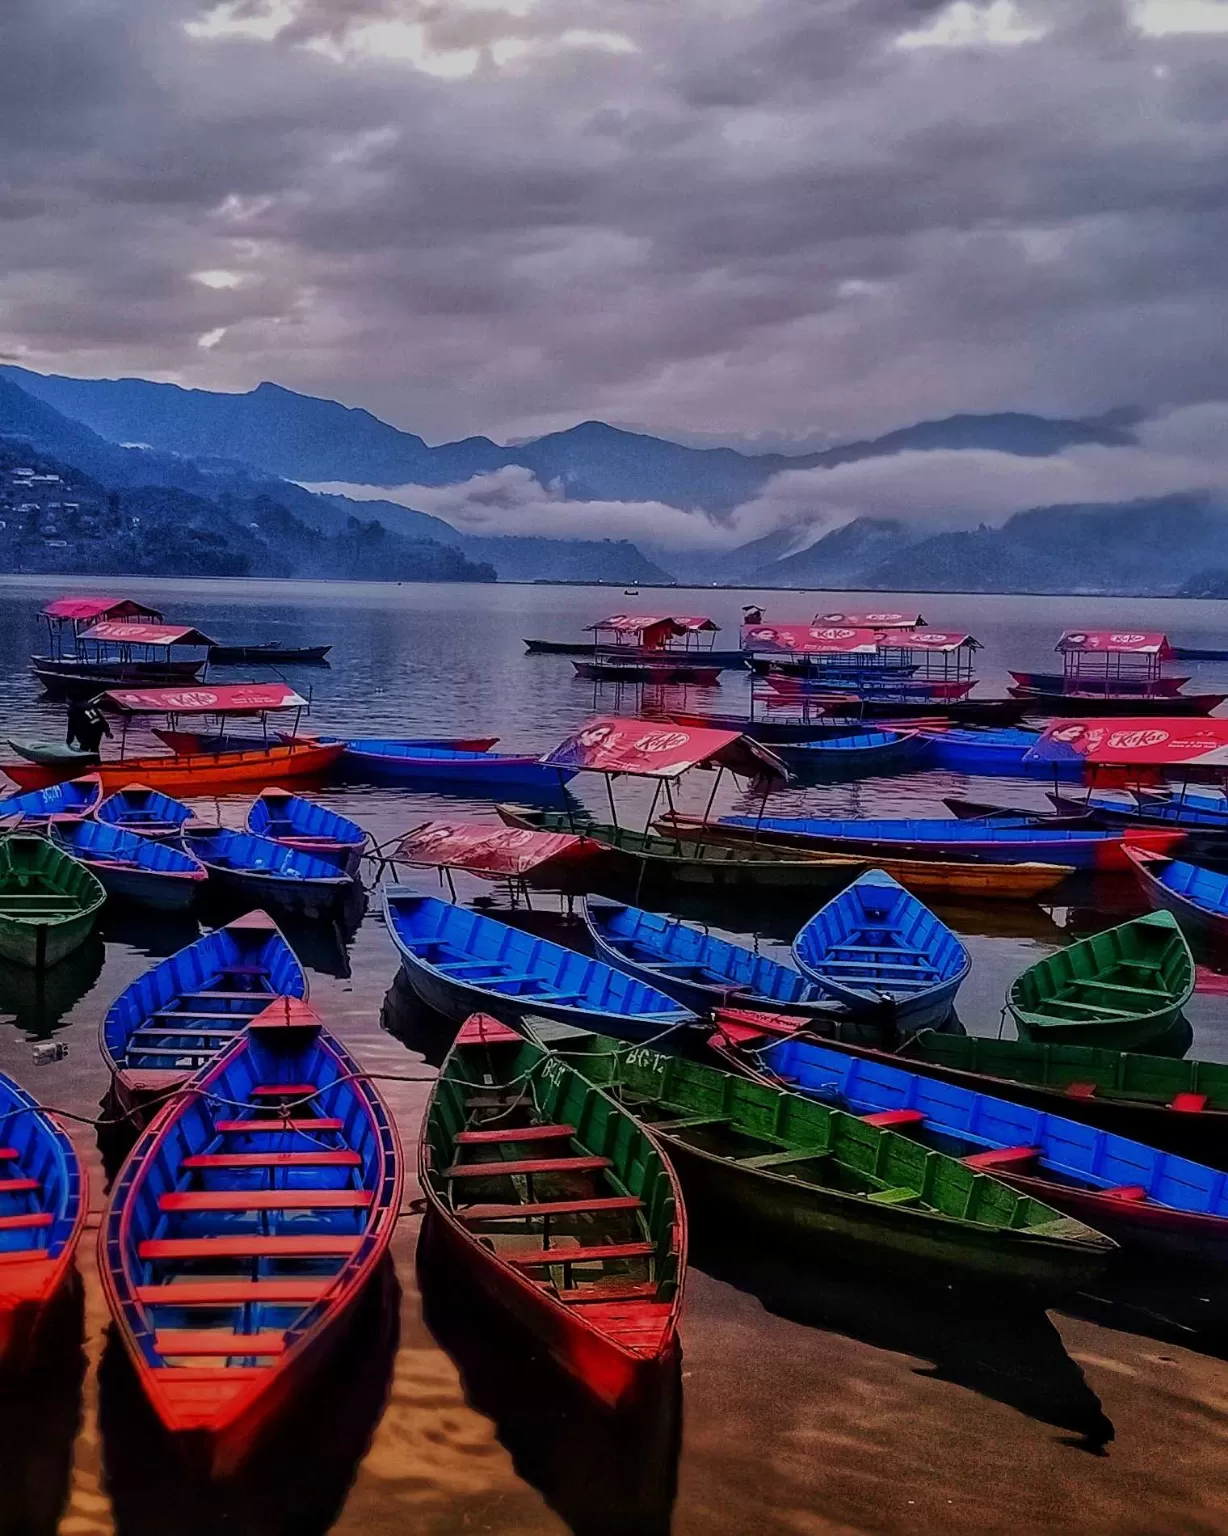 Photo of Pokhara Lakeside By yogesh kunwar